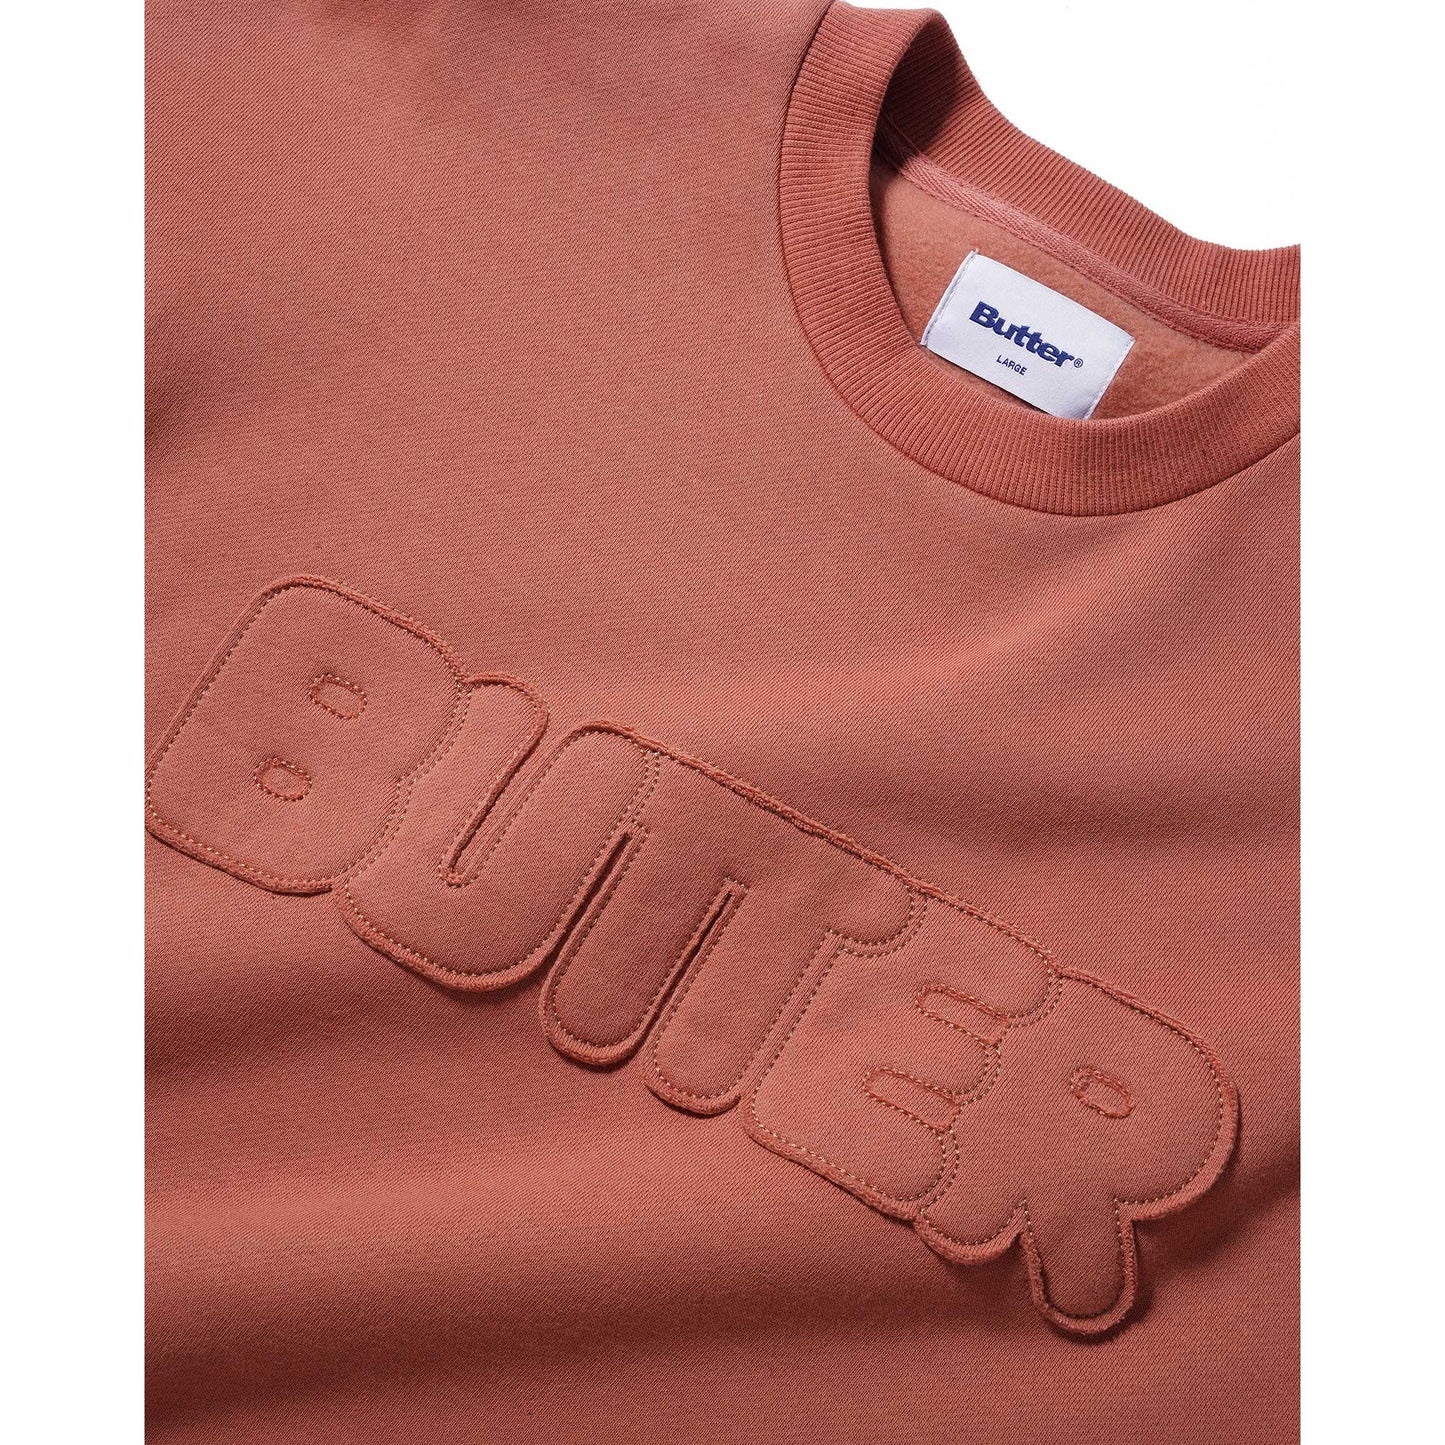 Butter Goods Fabric Applique Crewneck Sweatshirt, oak - Tiki Room Skateboards - 2